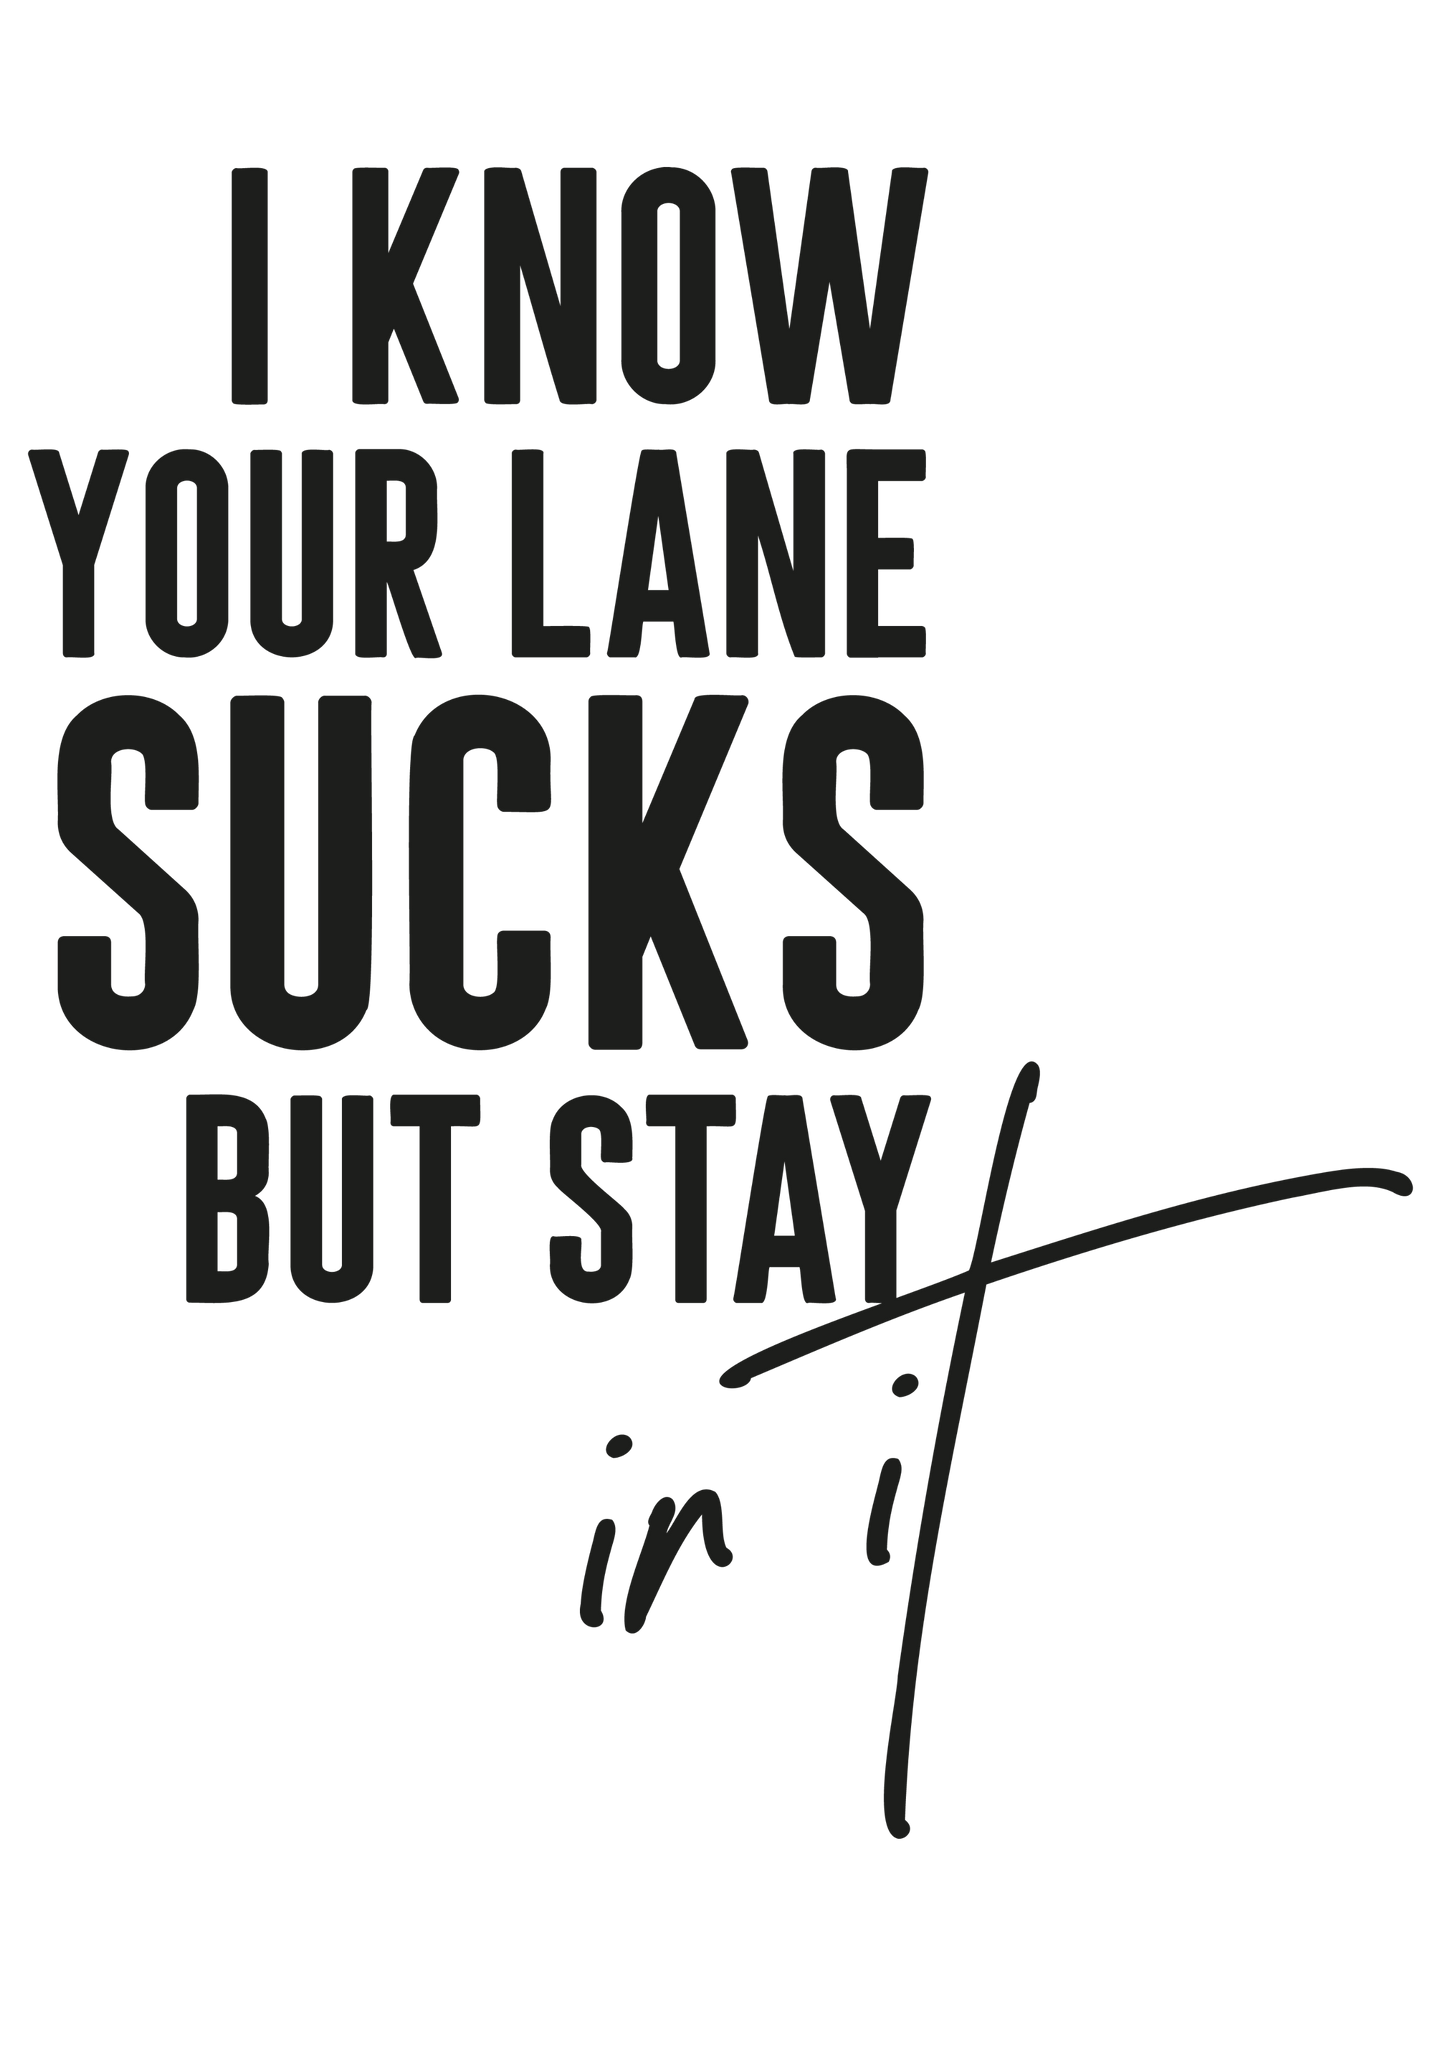 I Know Your Lane Sucks